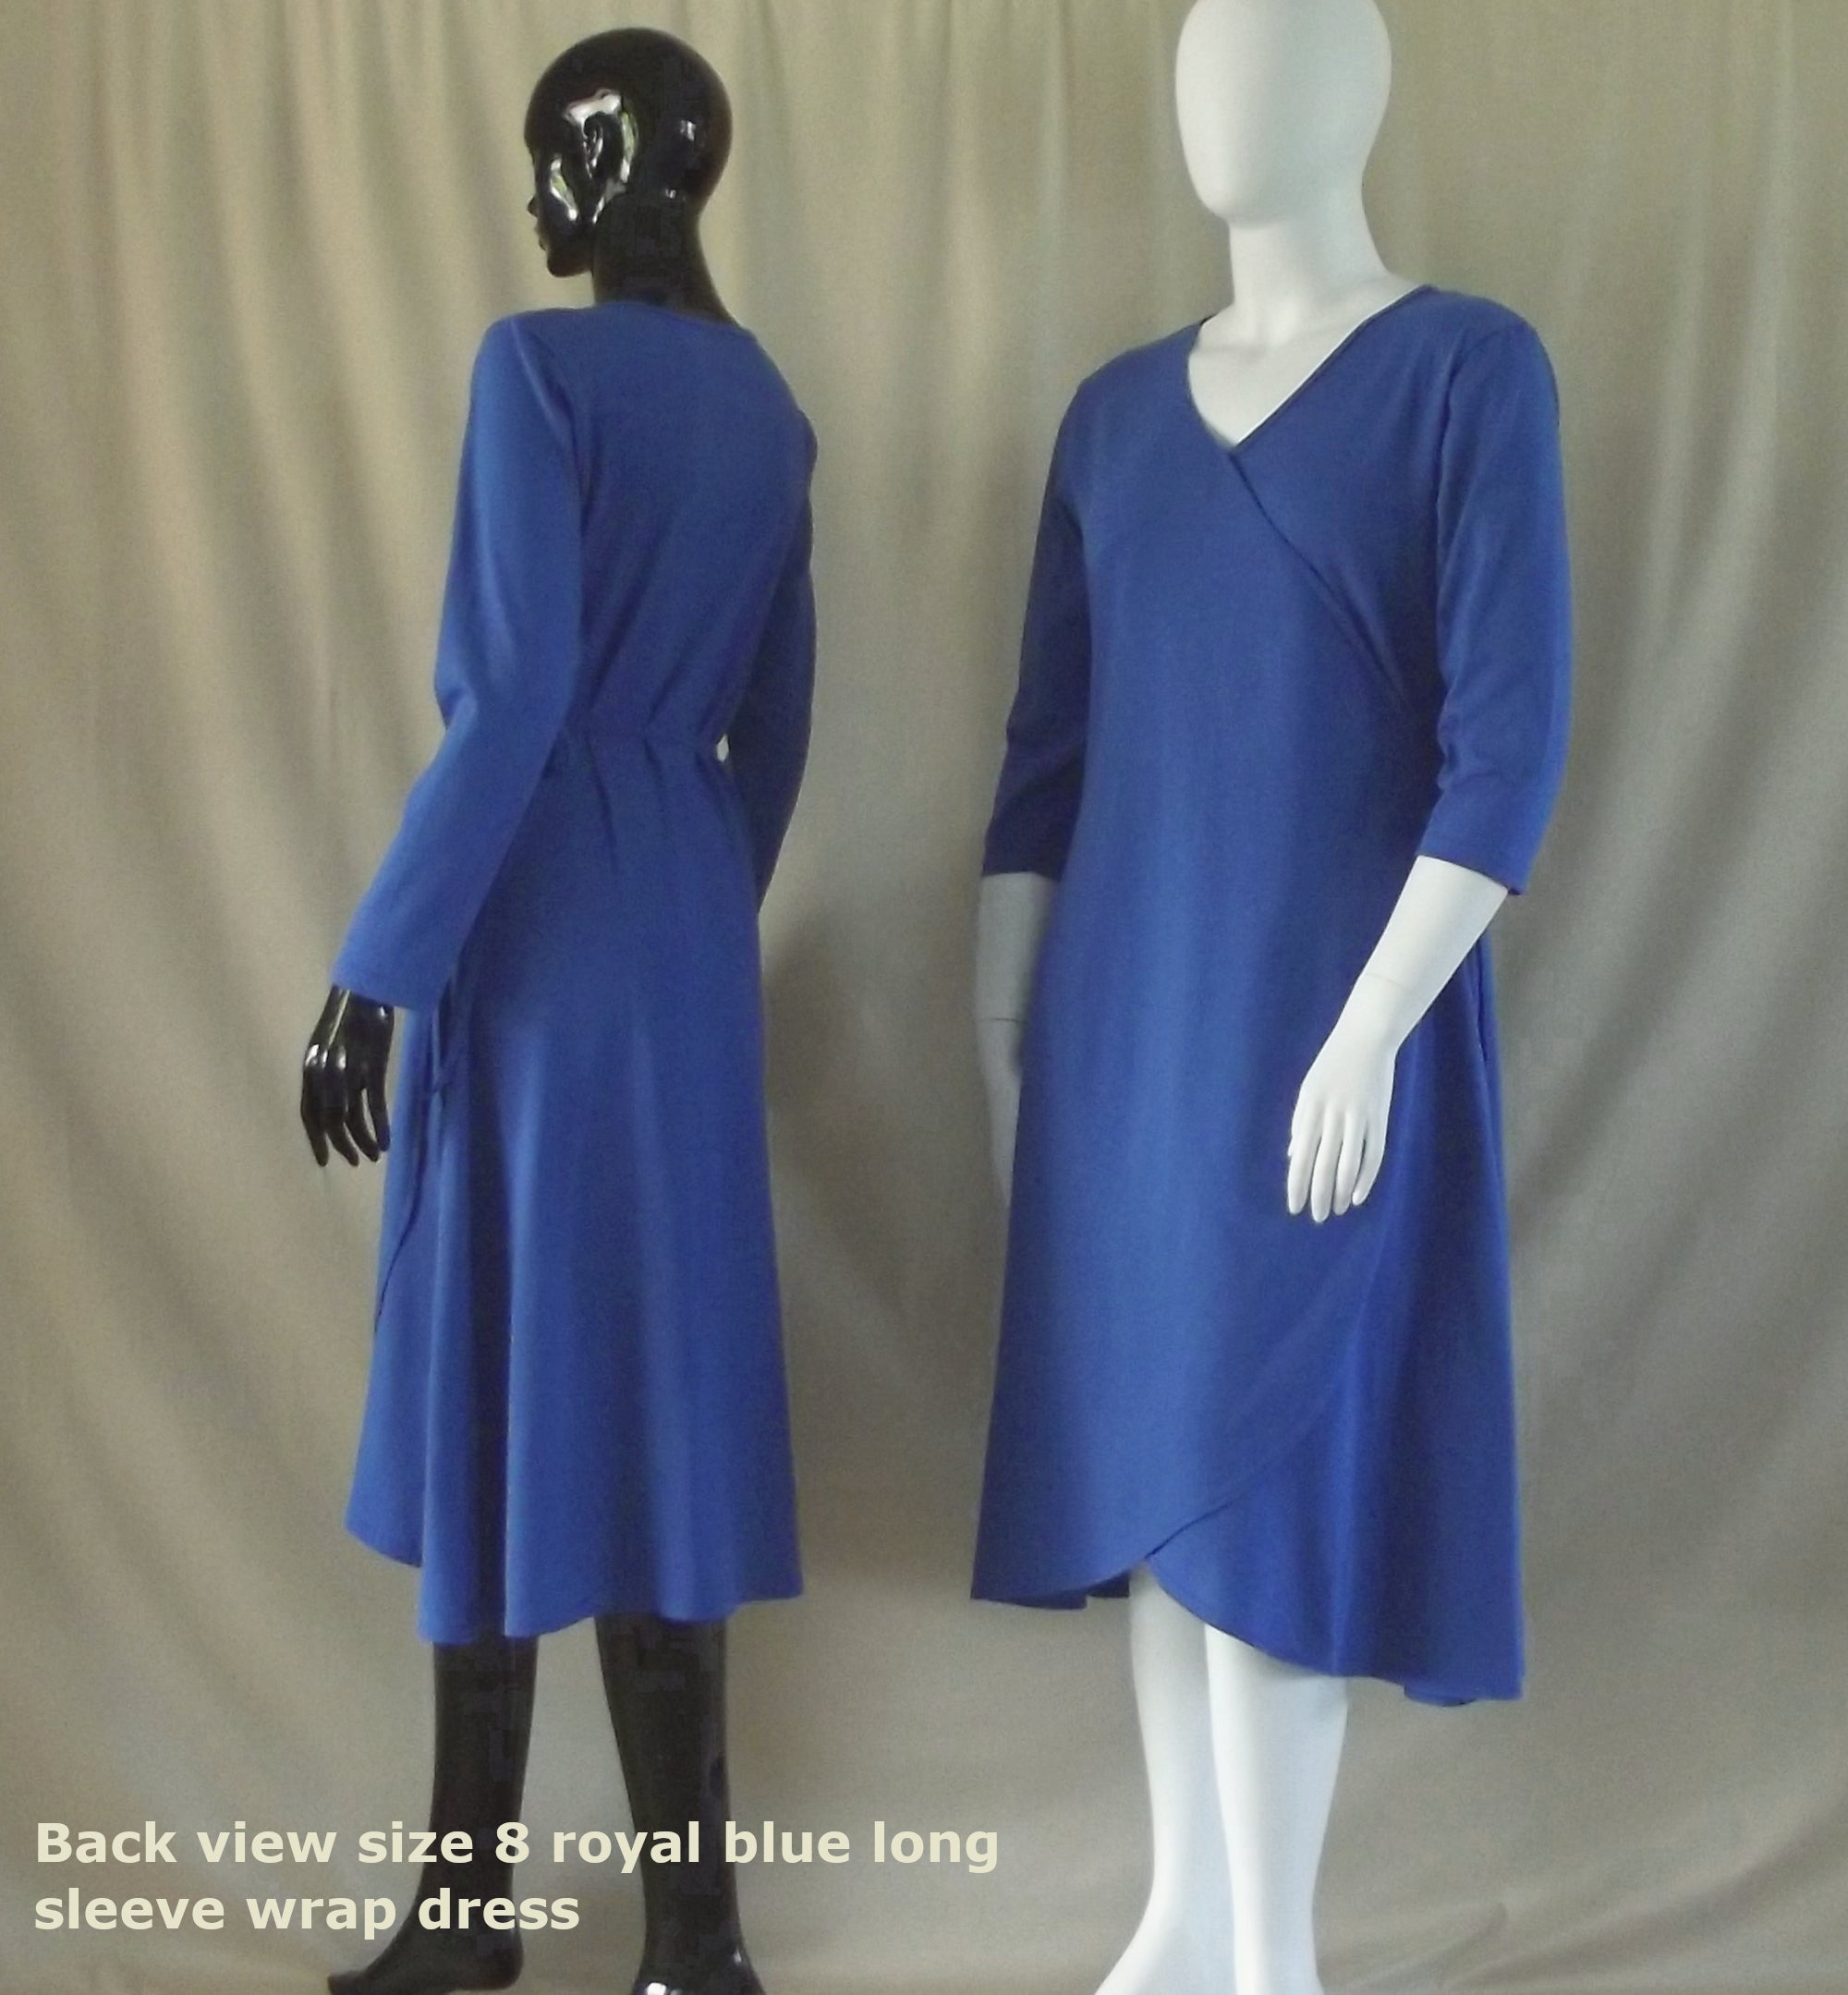 back view of royal blue 3/4 sleeve cotton wrap dress, standing beside a plus size royal blue long sleeve cotton dress